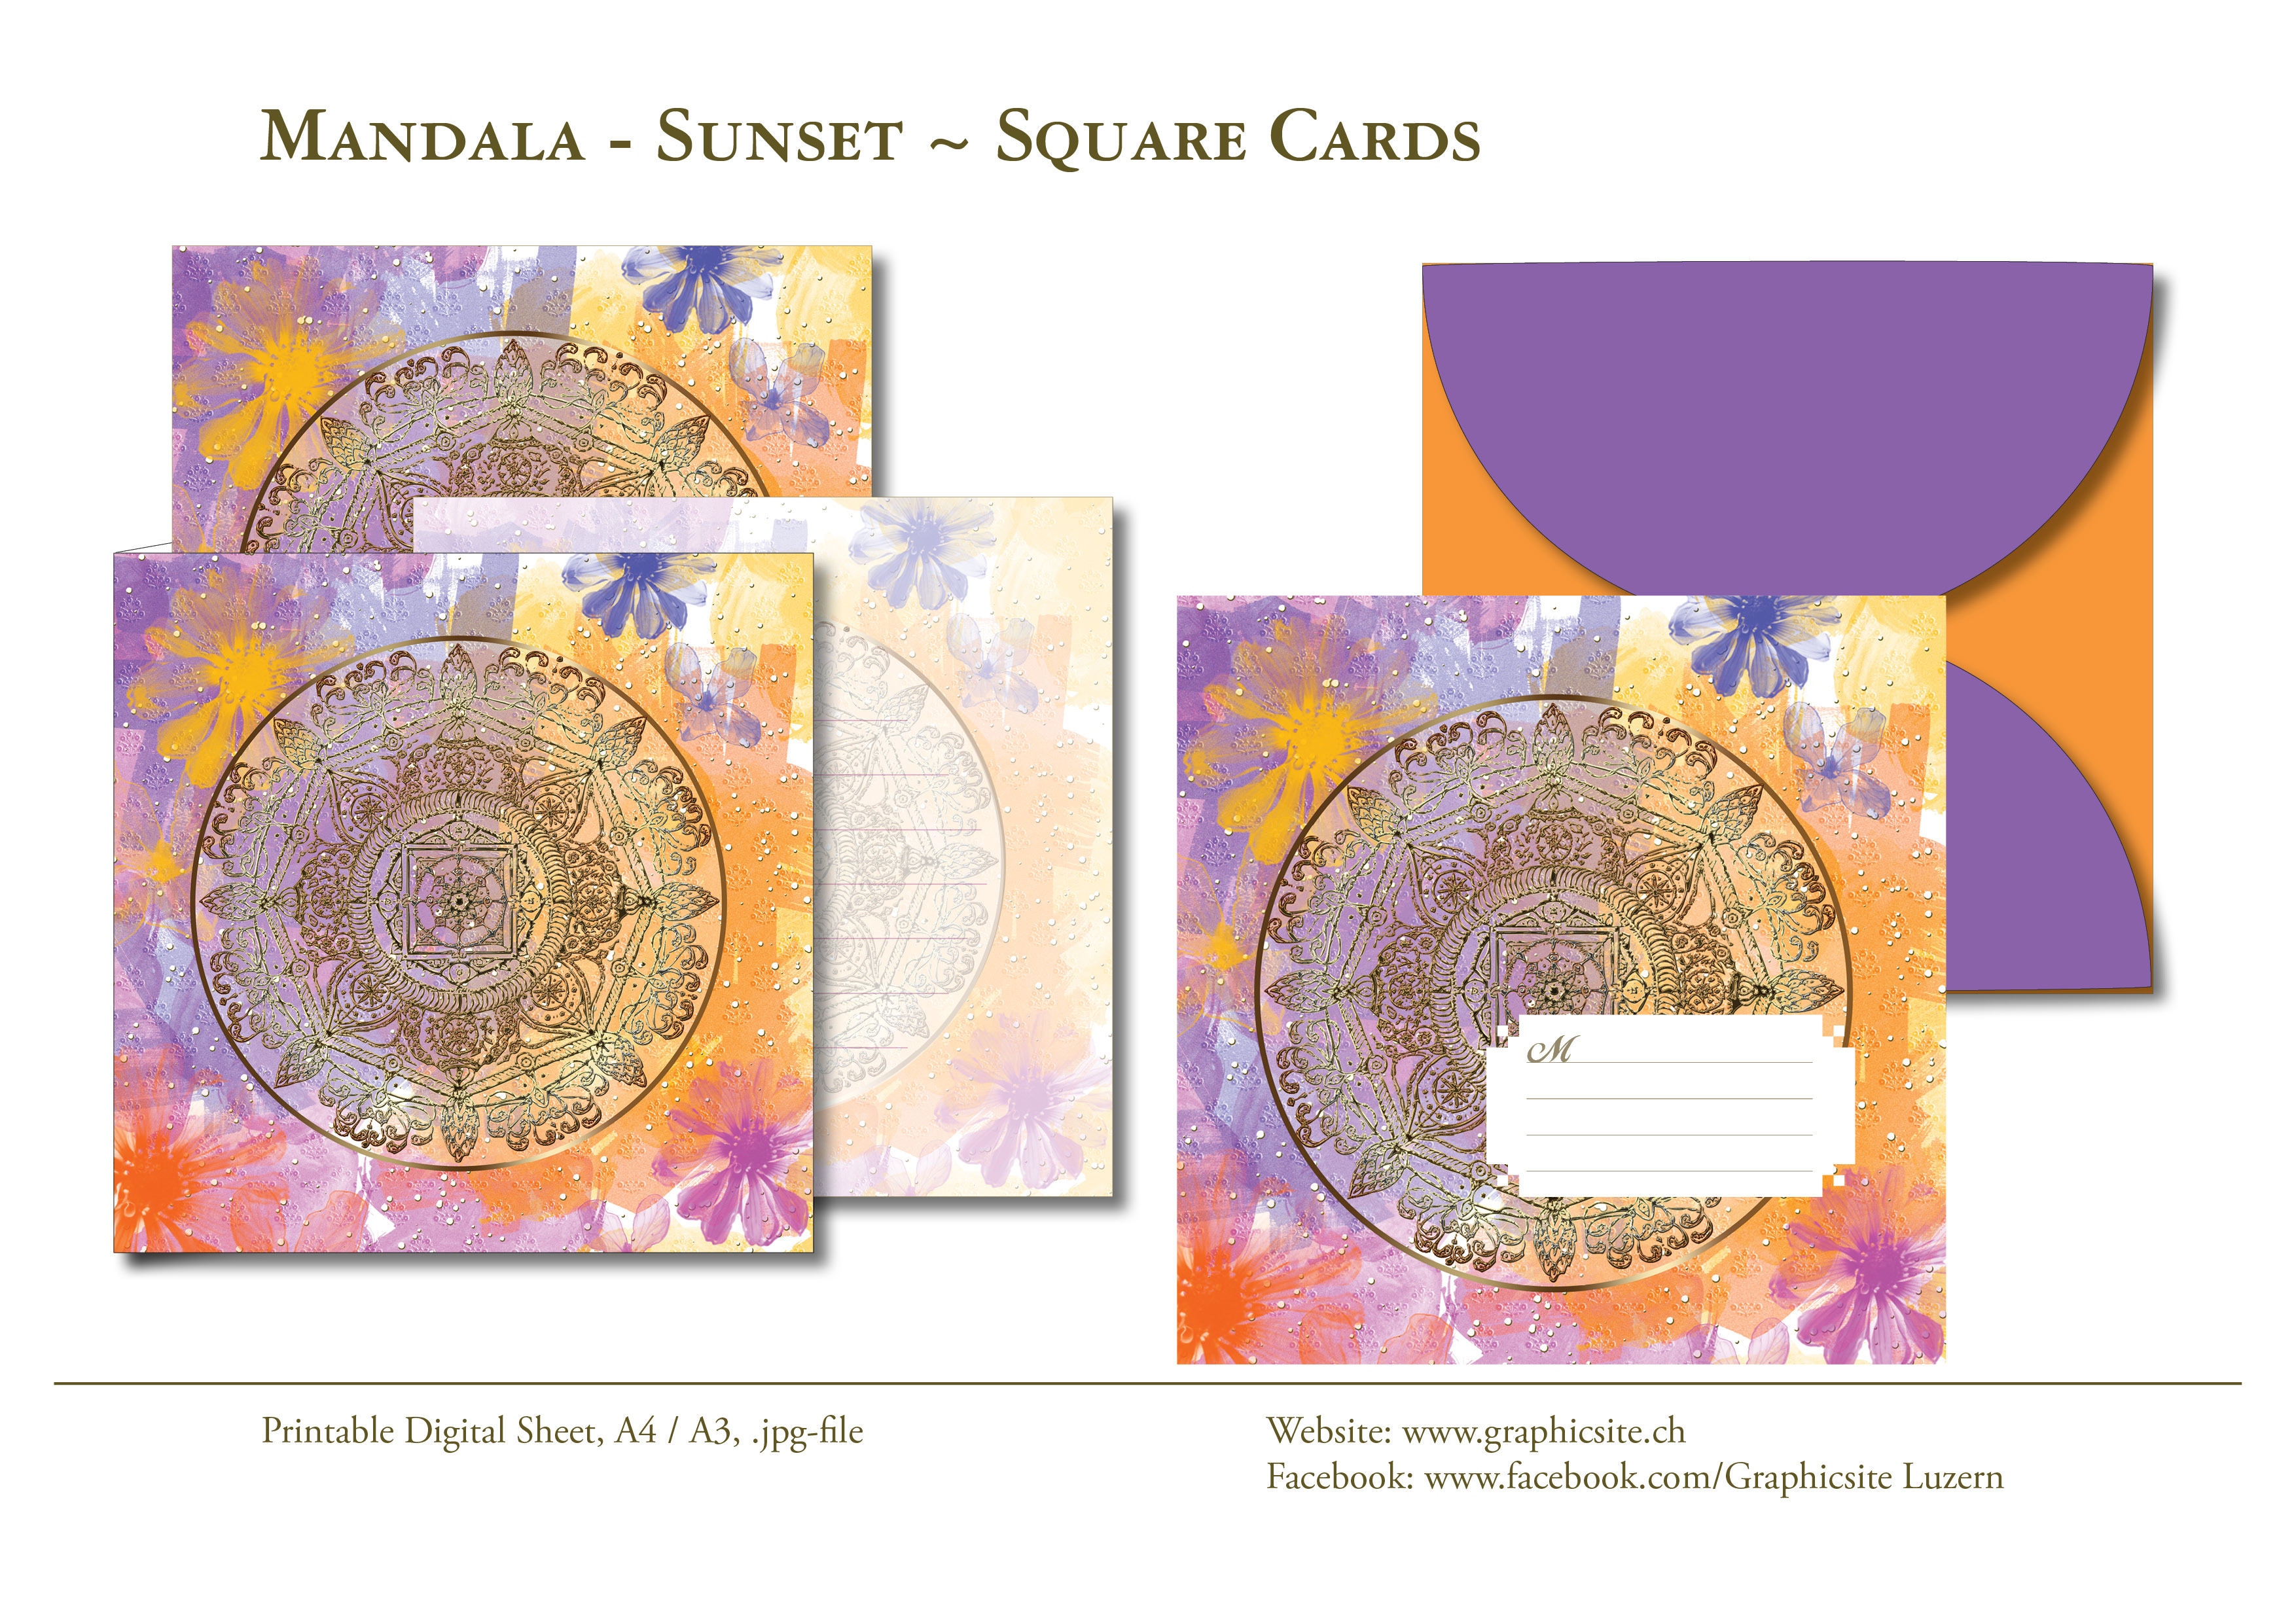 Karten selber drucken - Mandala Sunset - Karten, Grusskarten, Kuvert, Grafiker Luzern, Schweiz